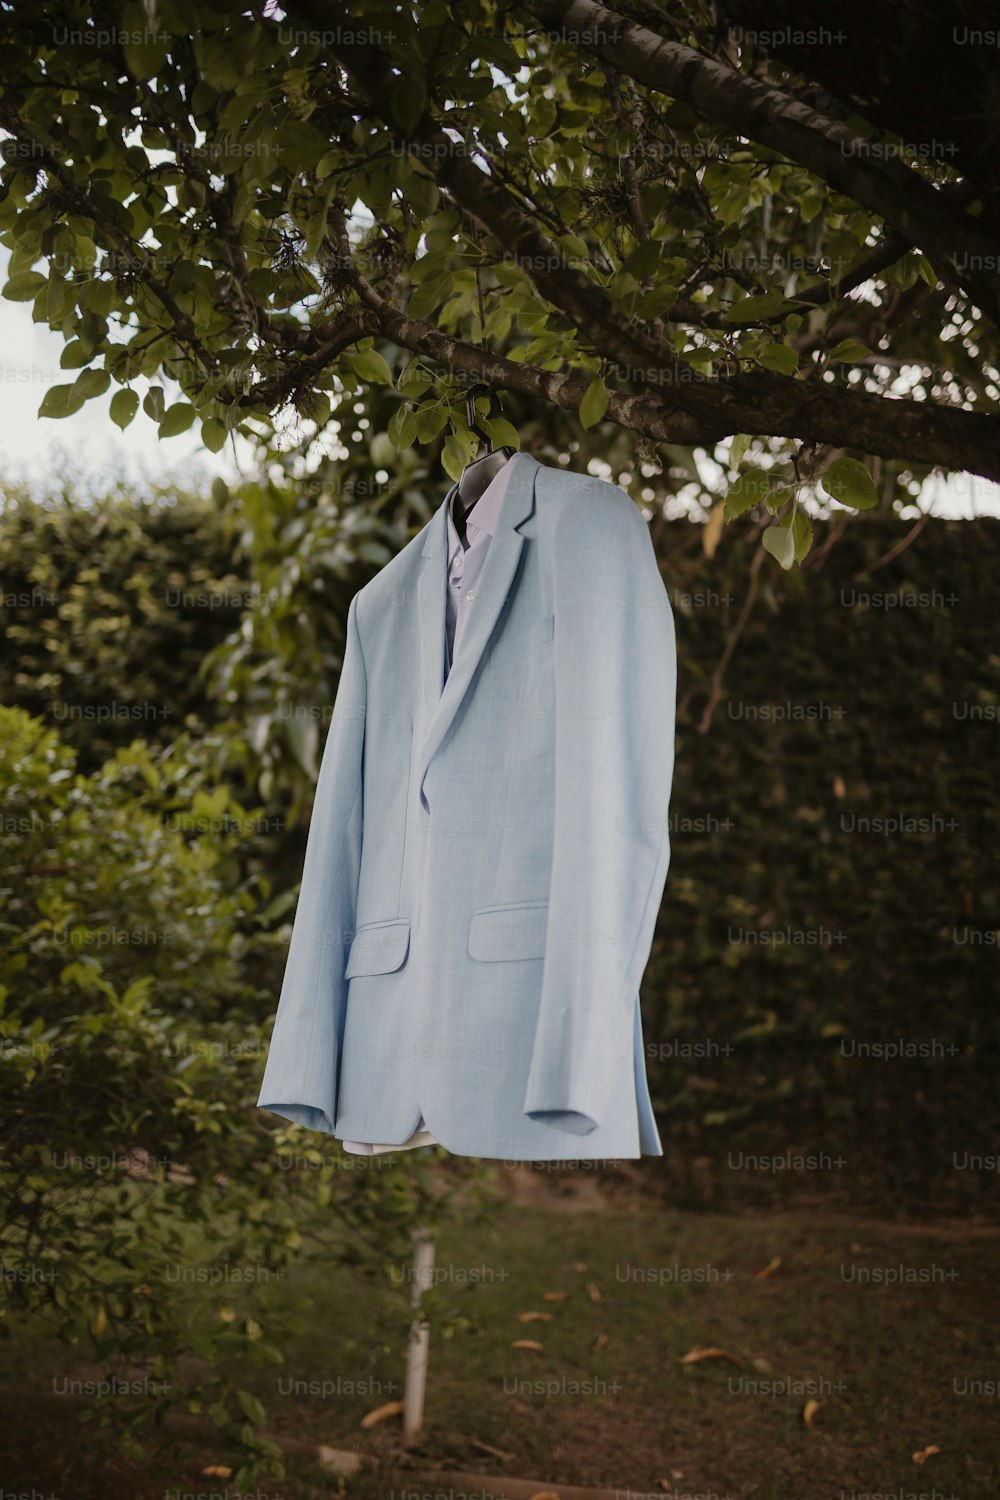 a blue suit hanging on a clothes line